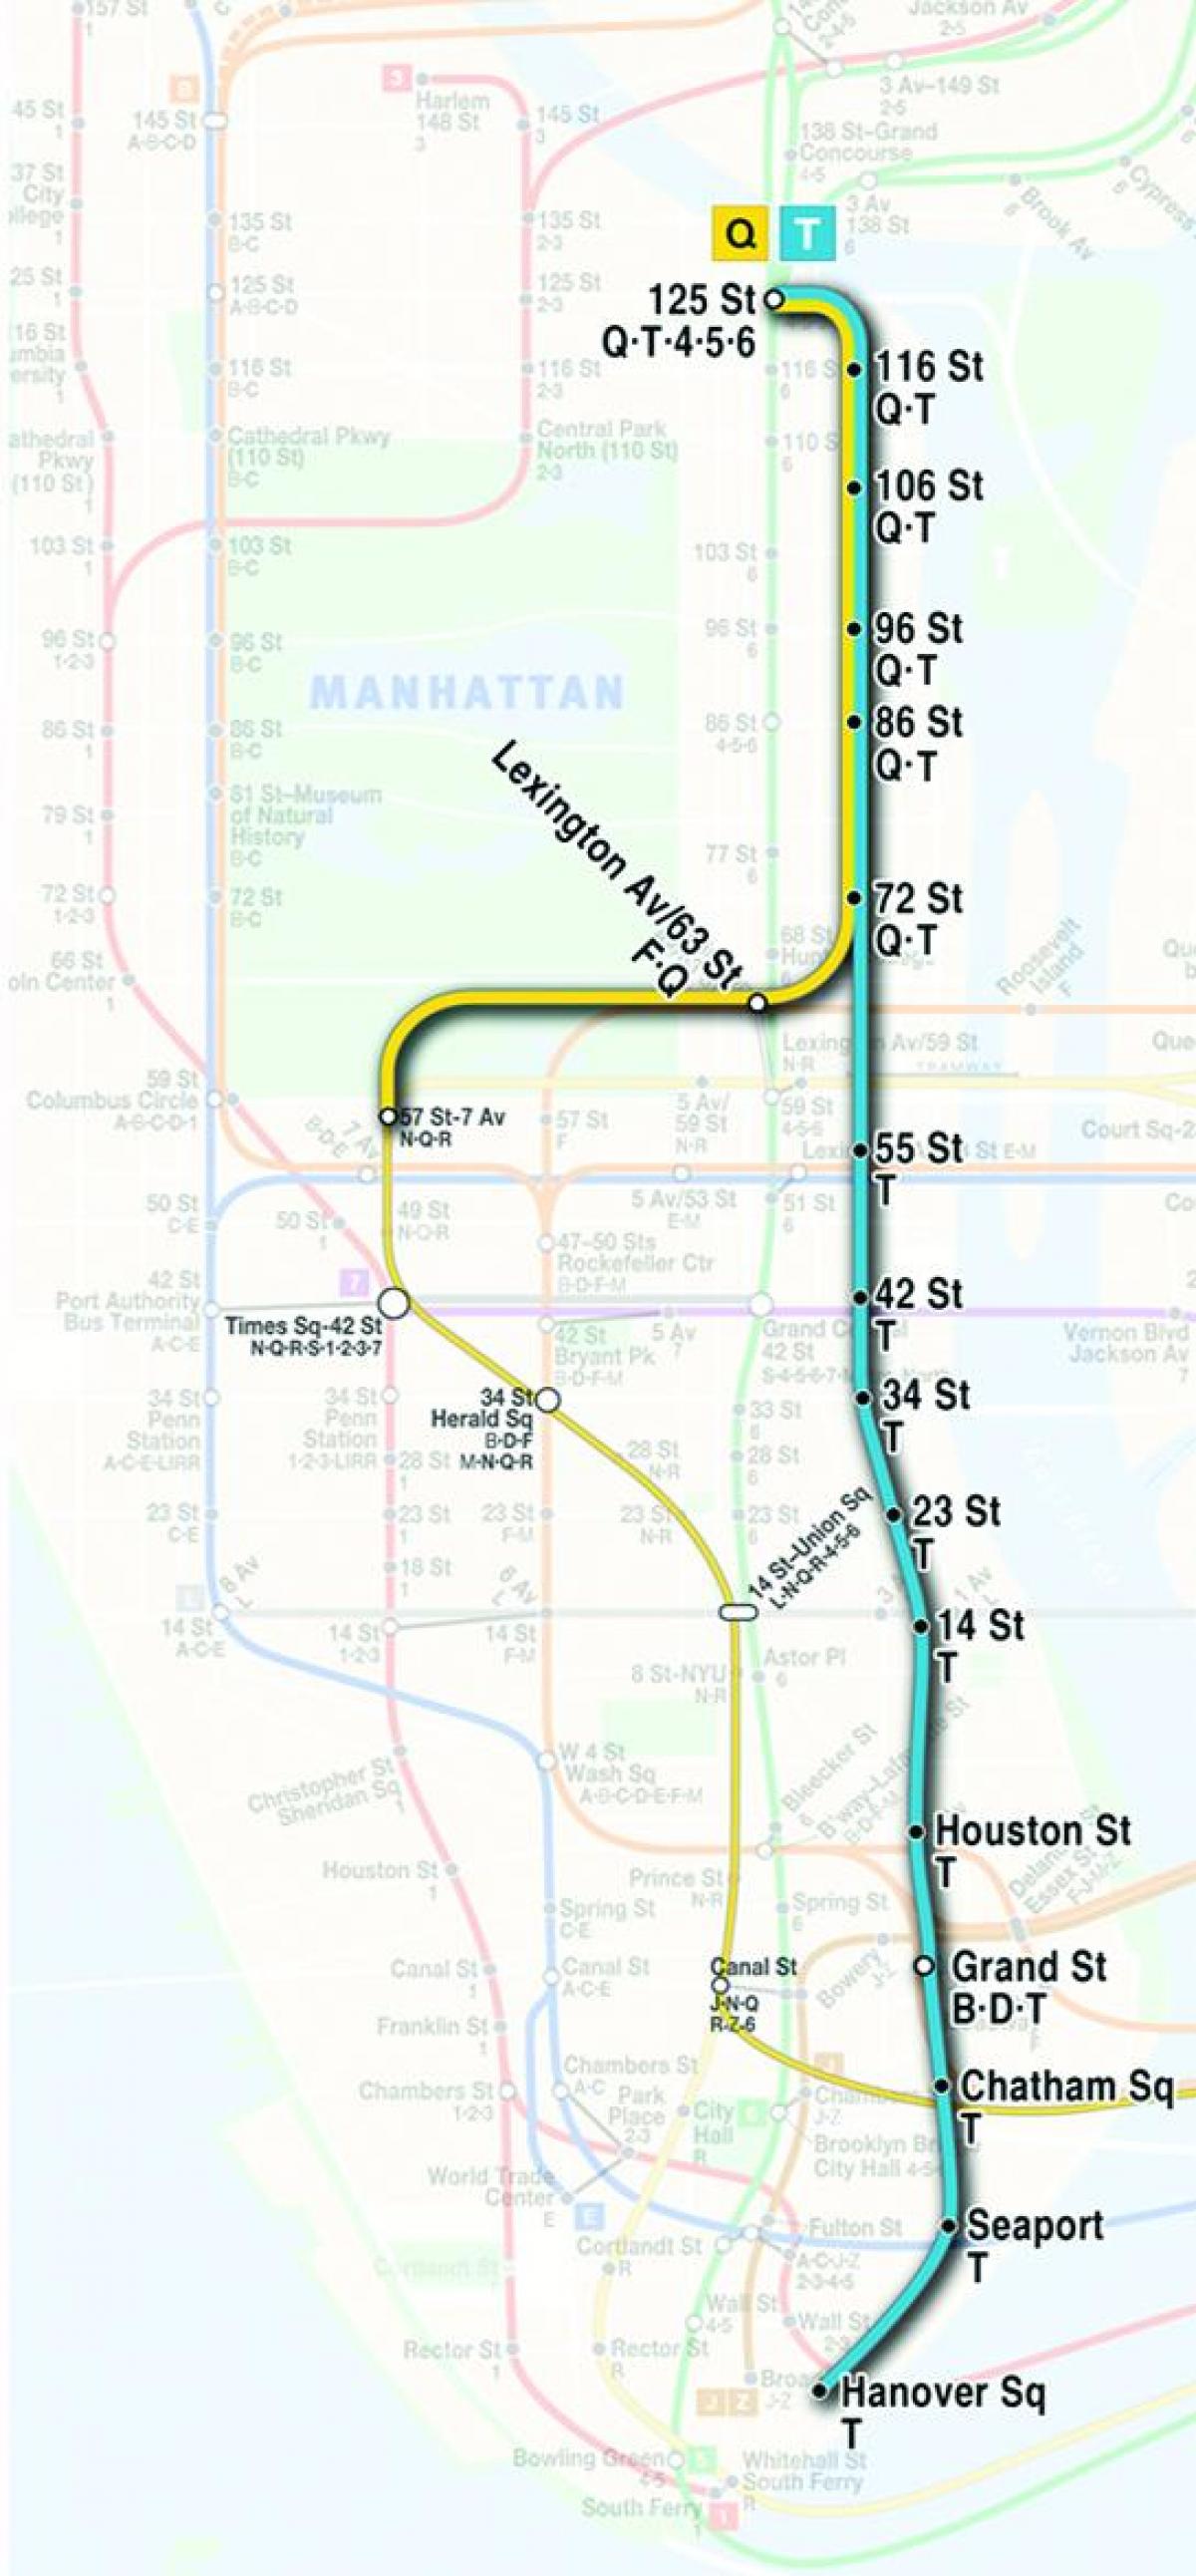 kort over second avenue subway